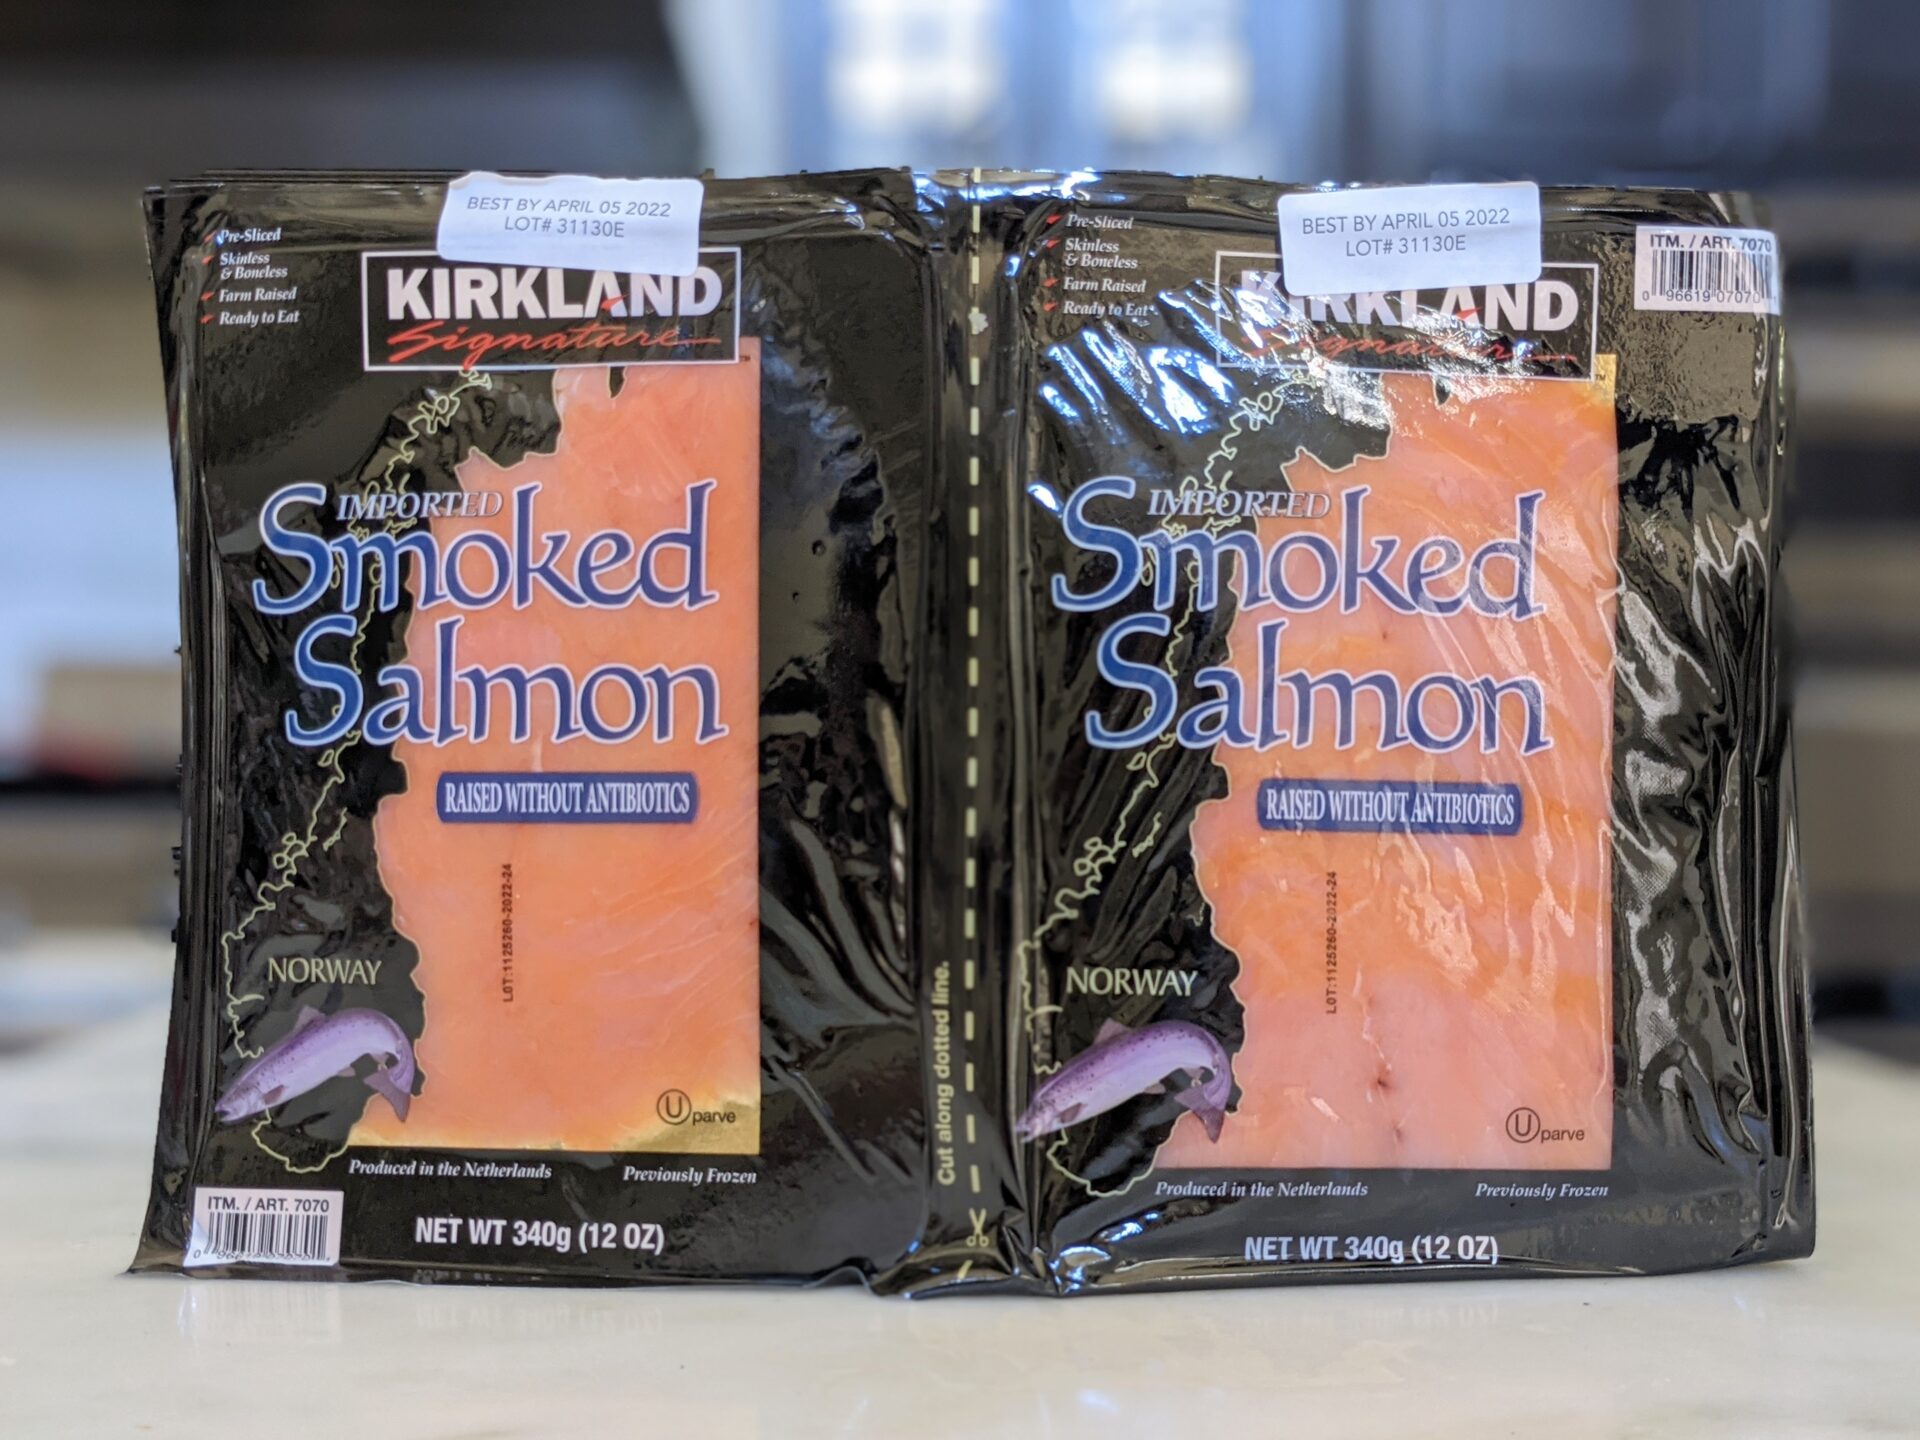 Costco-Imported-Smoked-Salmon-Kirkland-Signature